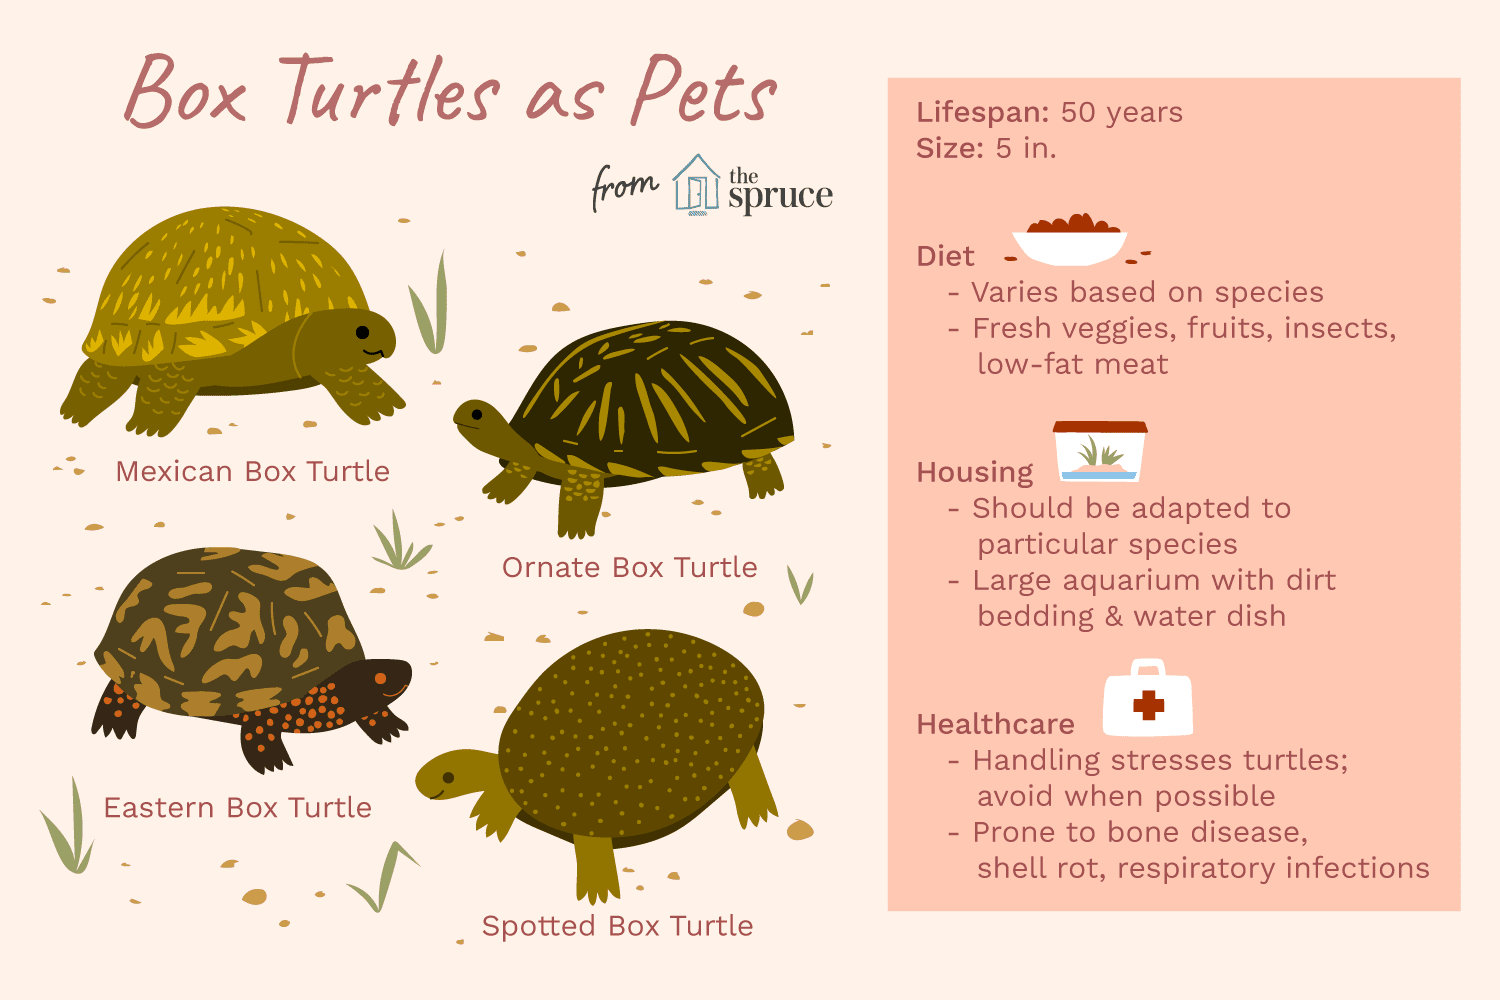 Are Box Turtles Good Pets